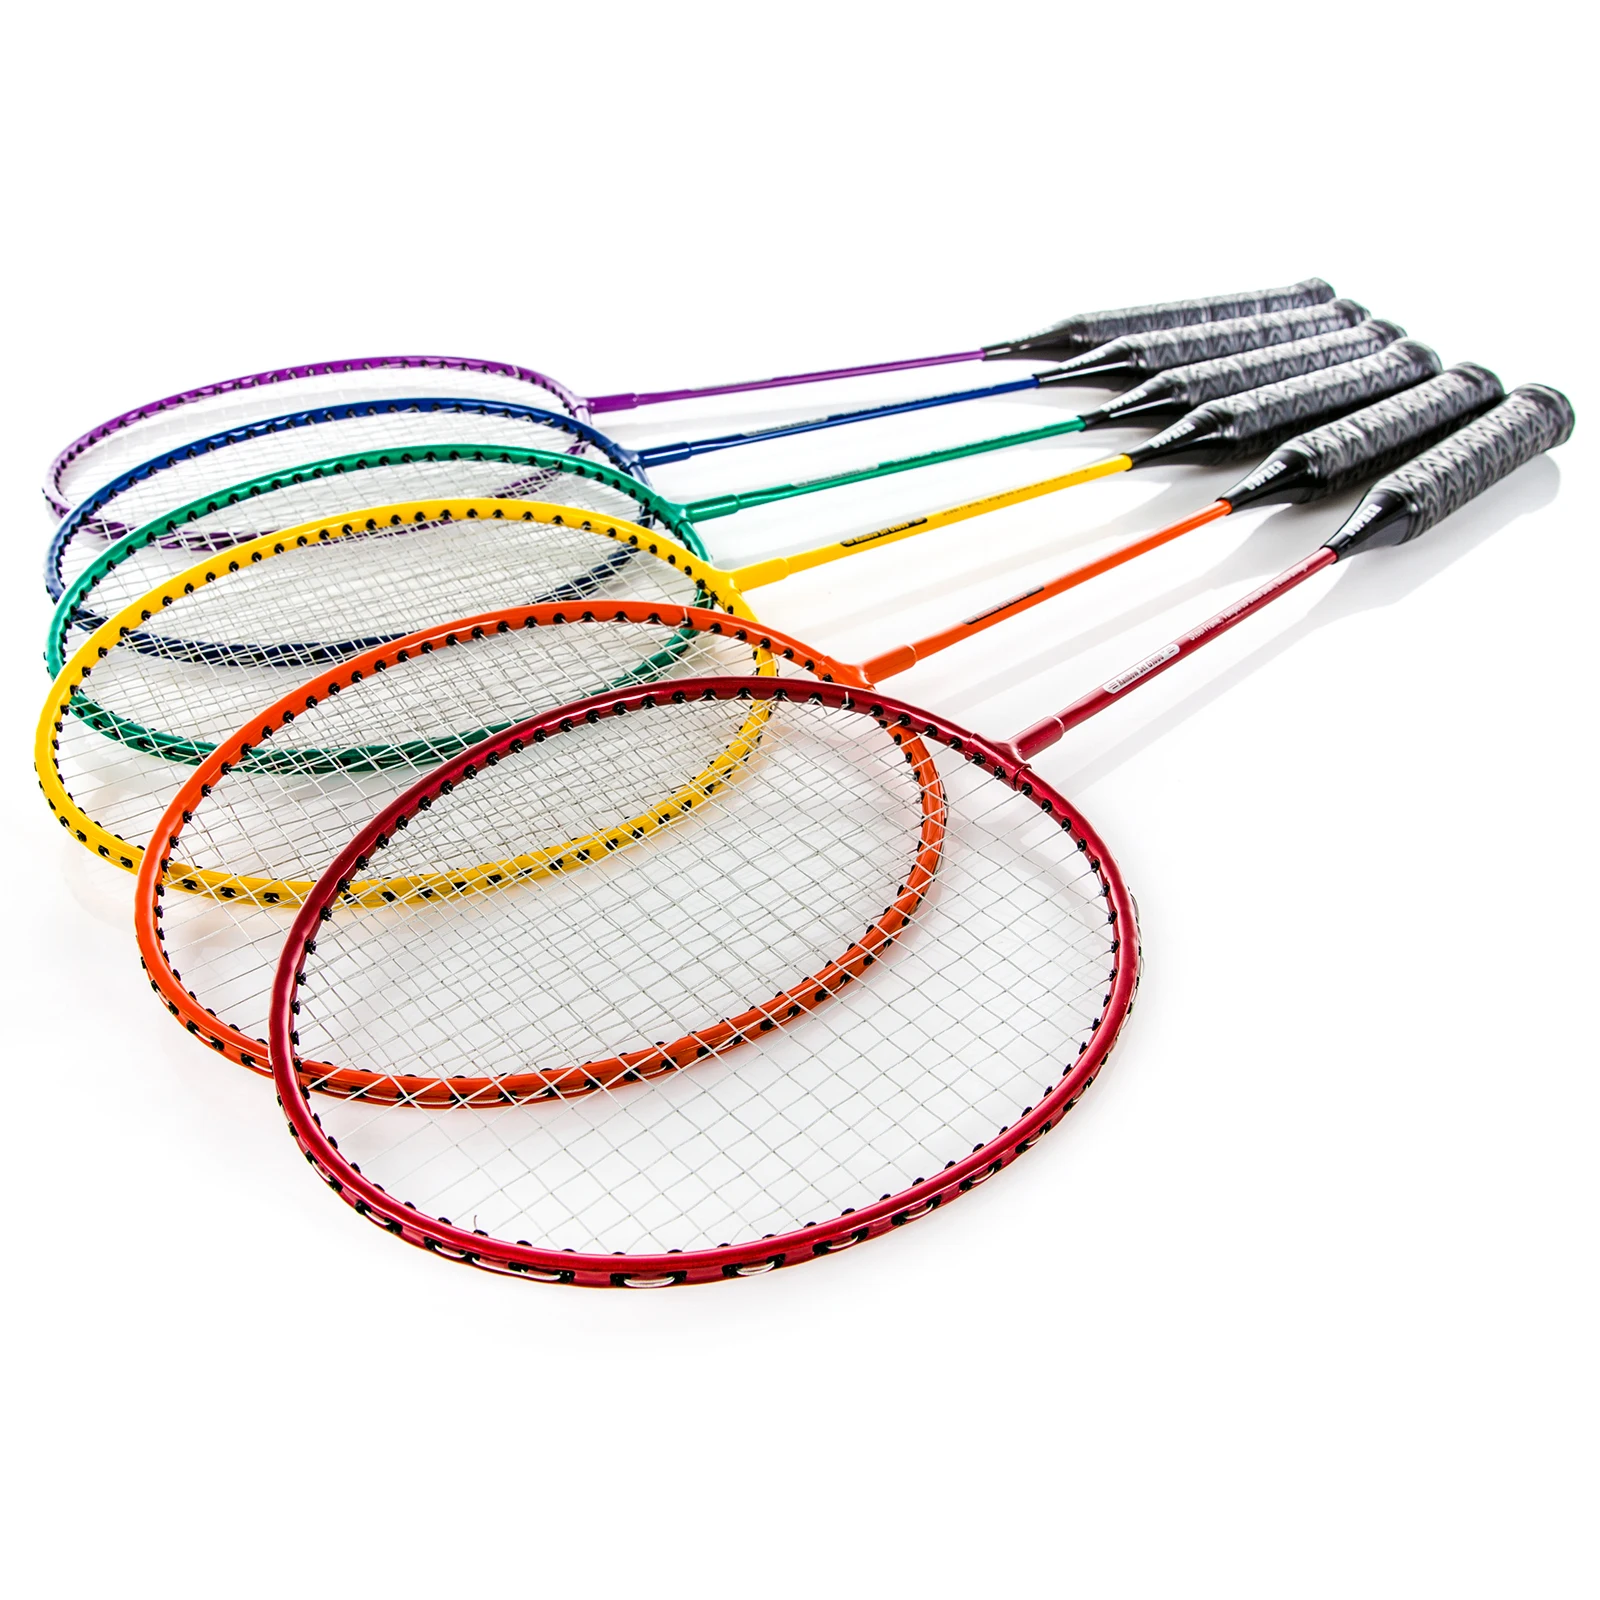 Atletisch Shipley Interpunctie Durable Hot Selling Badminton Set 4 Rackets Favorable Price Badminton  Products Lining Badminton Racket - Buy Cheap Badminton Rackets,Ball  Badminton Racket,Ball Badminton Racket Product on Alibaba.com